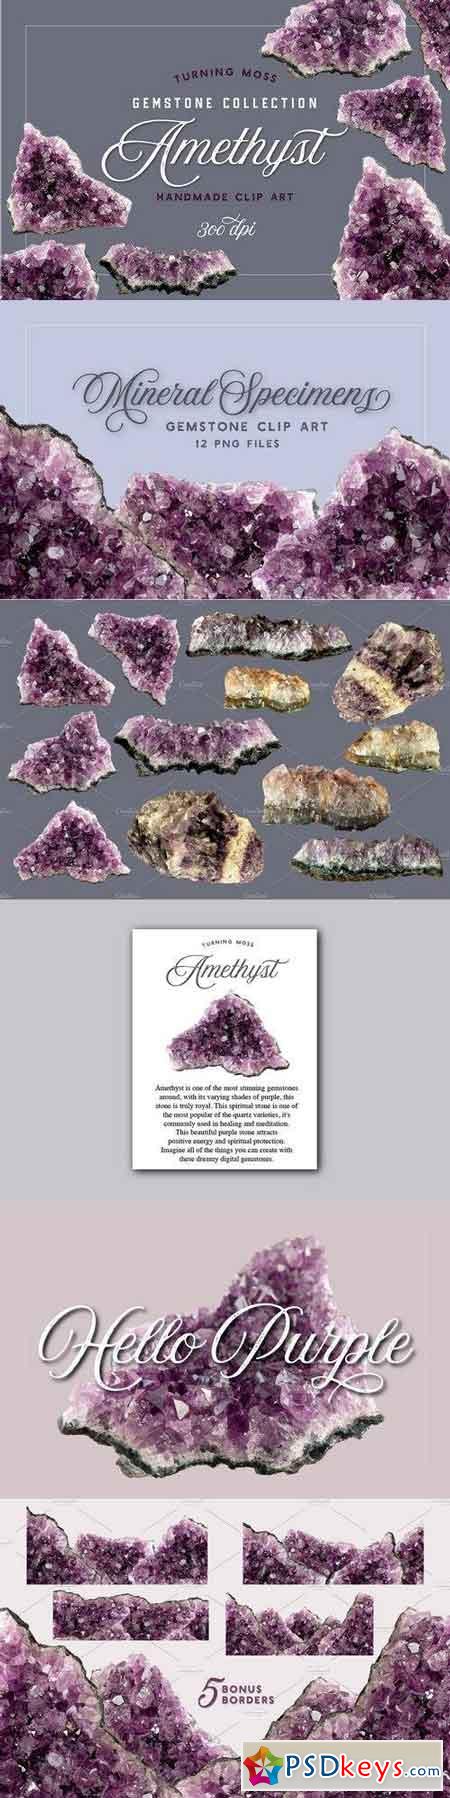 Amethyst - Gemstone Specimens 1912815